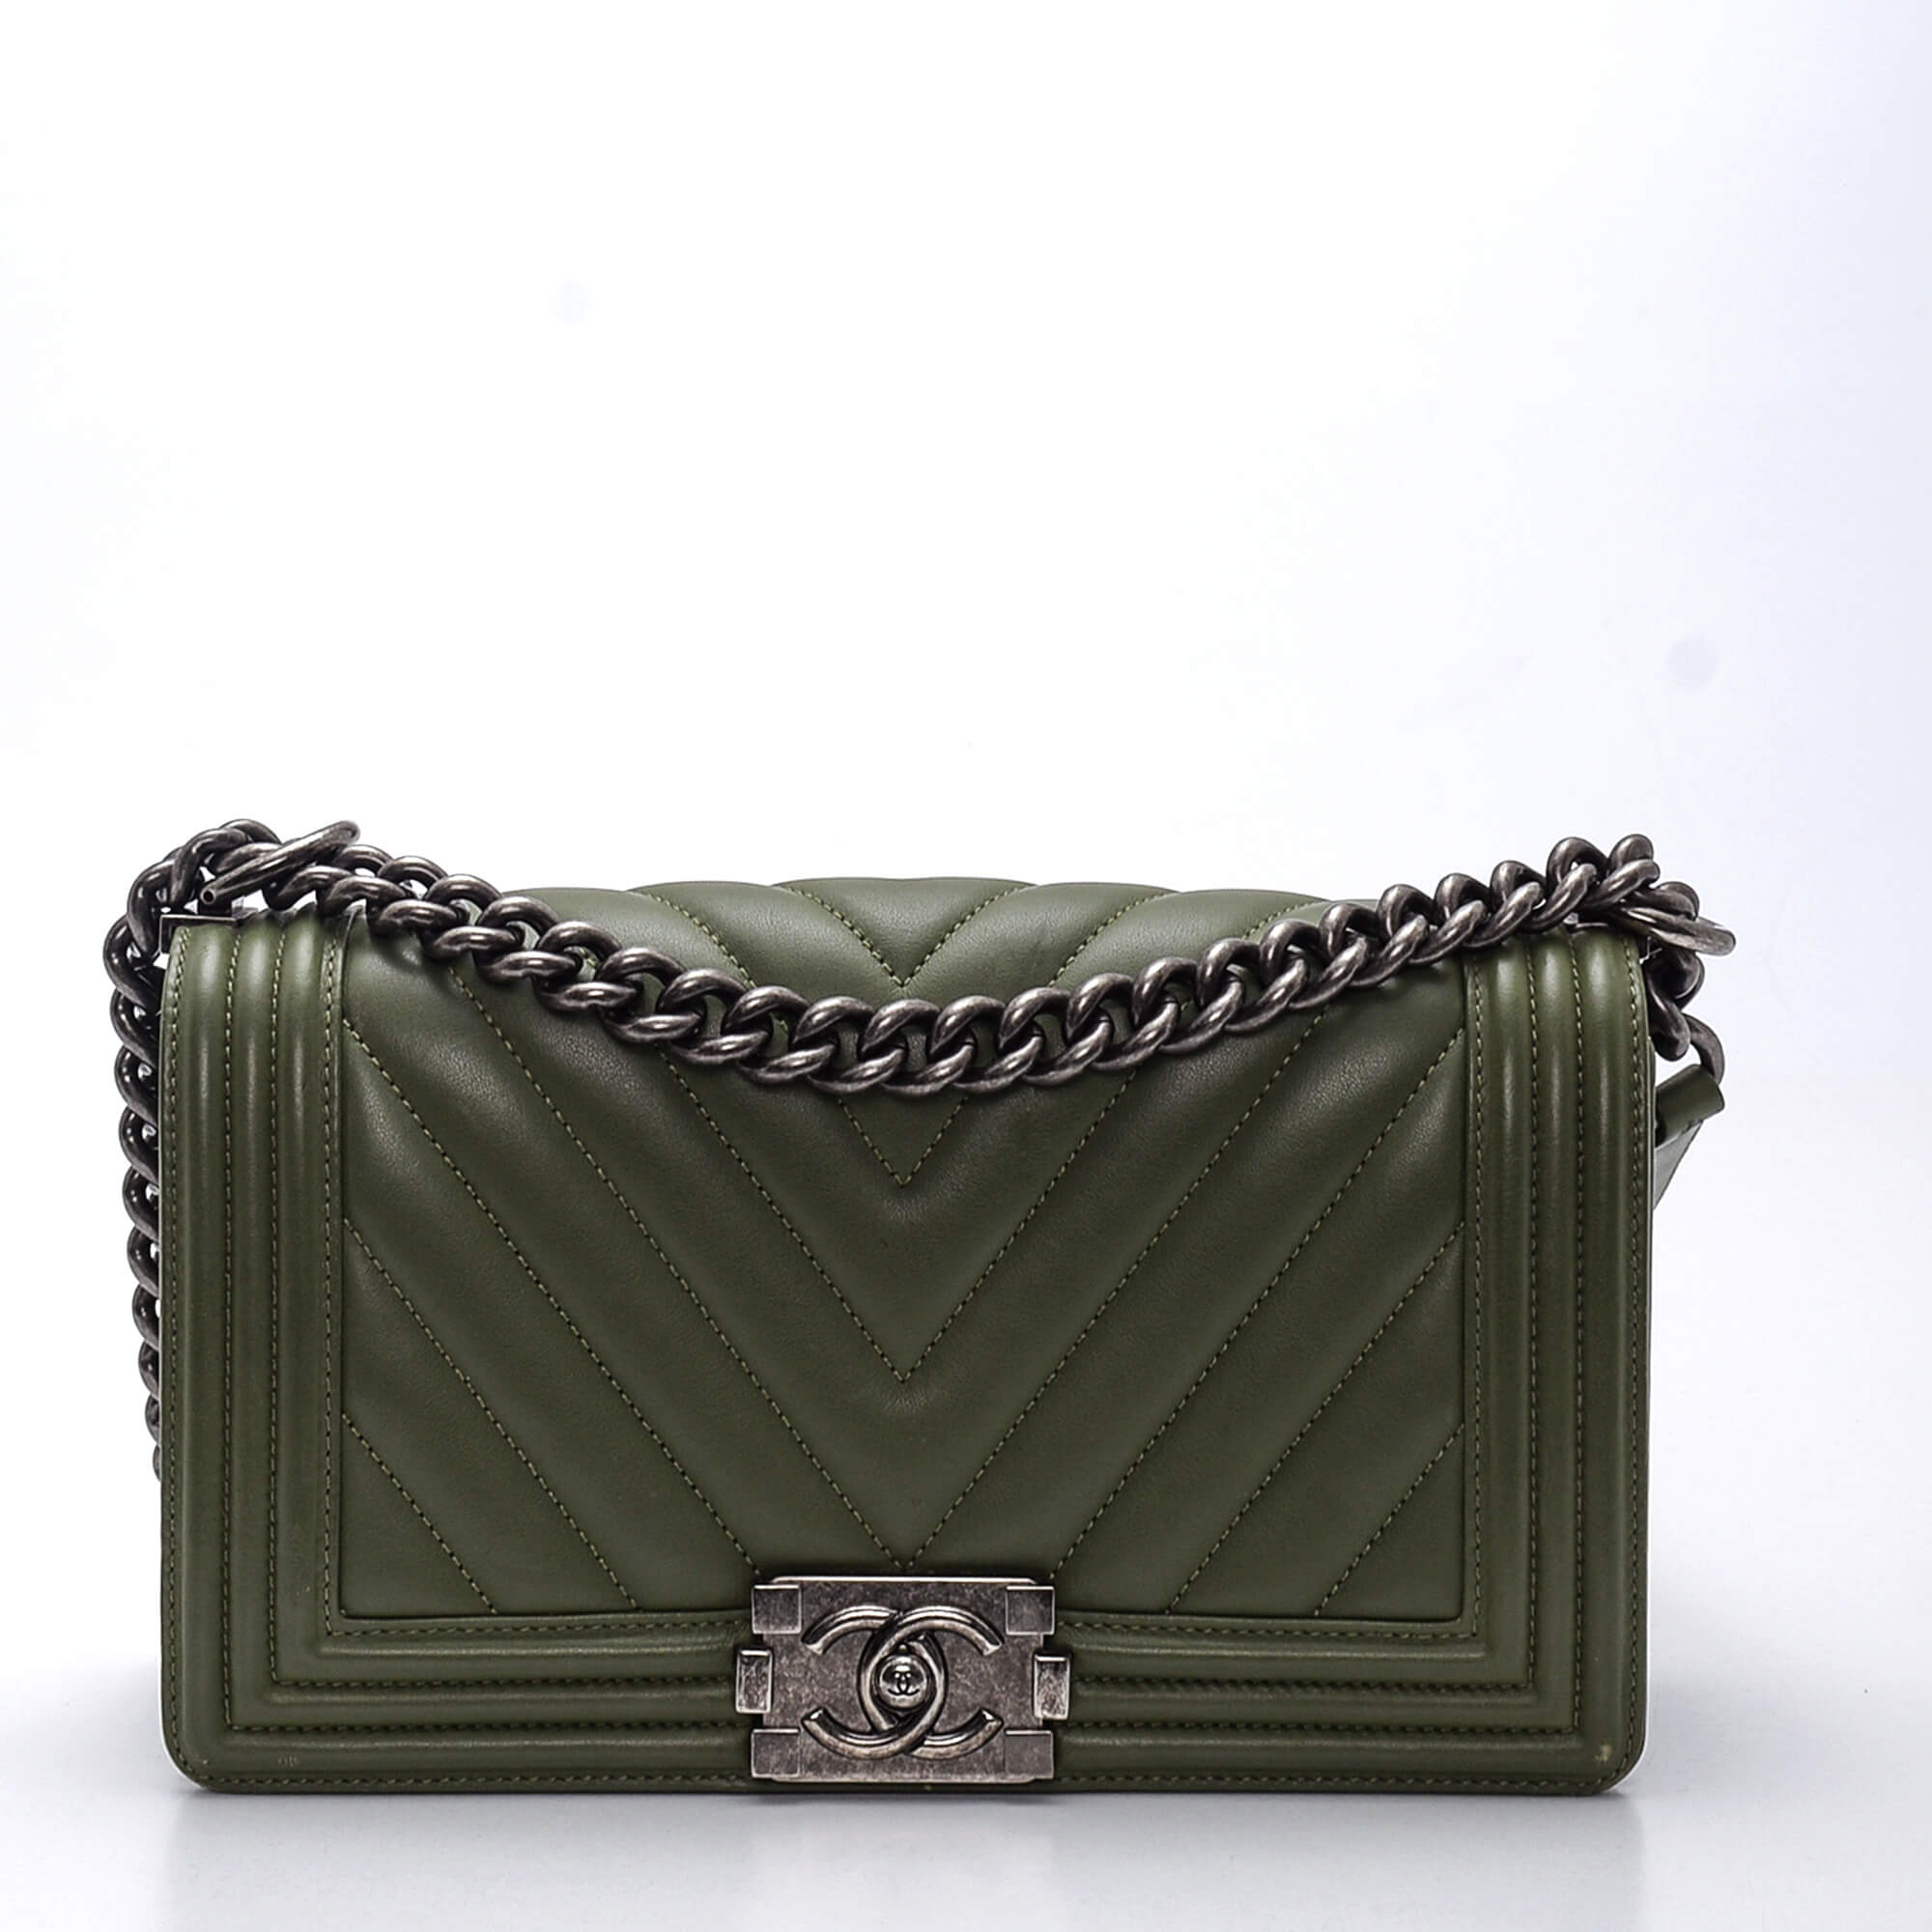 Chanel - Khaki Chevron Lambskin Leather Medium Boy Bag 